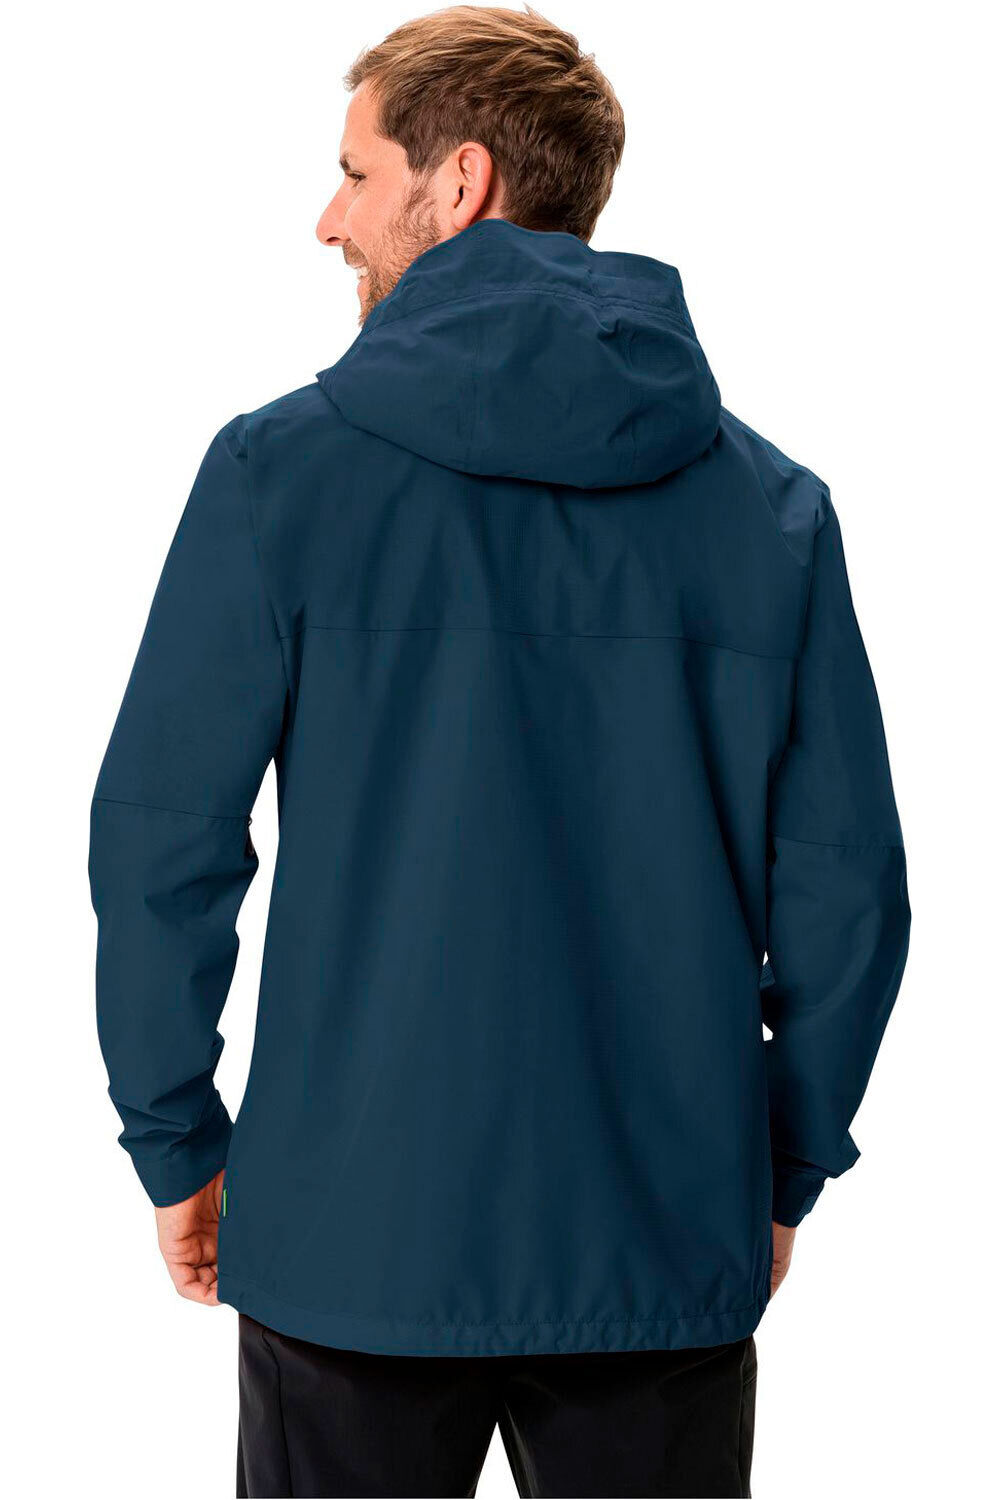 Vaude chaqueta impermeable hombre Men  s Lierne Jacket II vista trasera